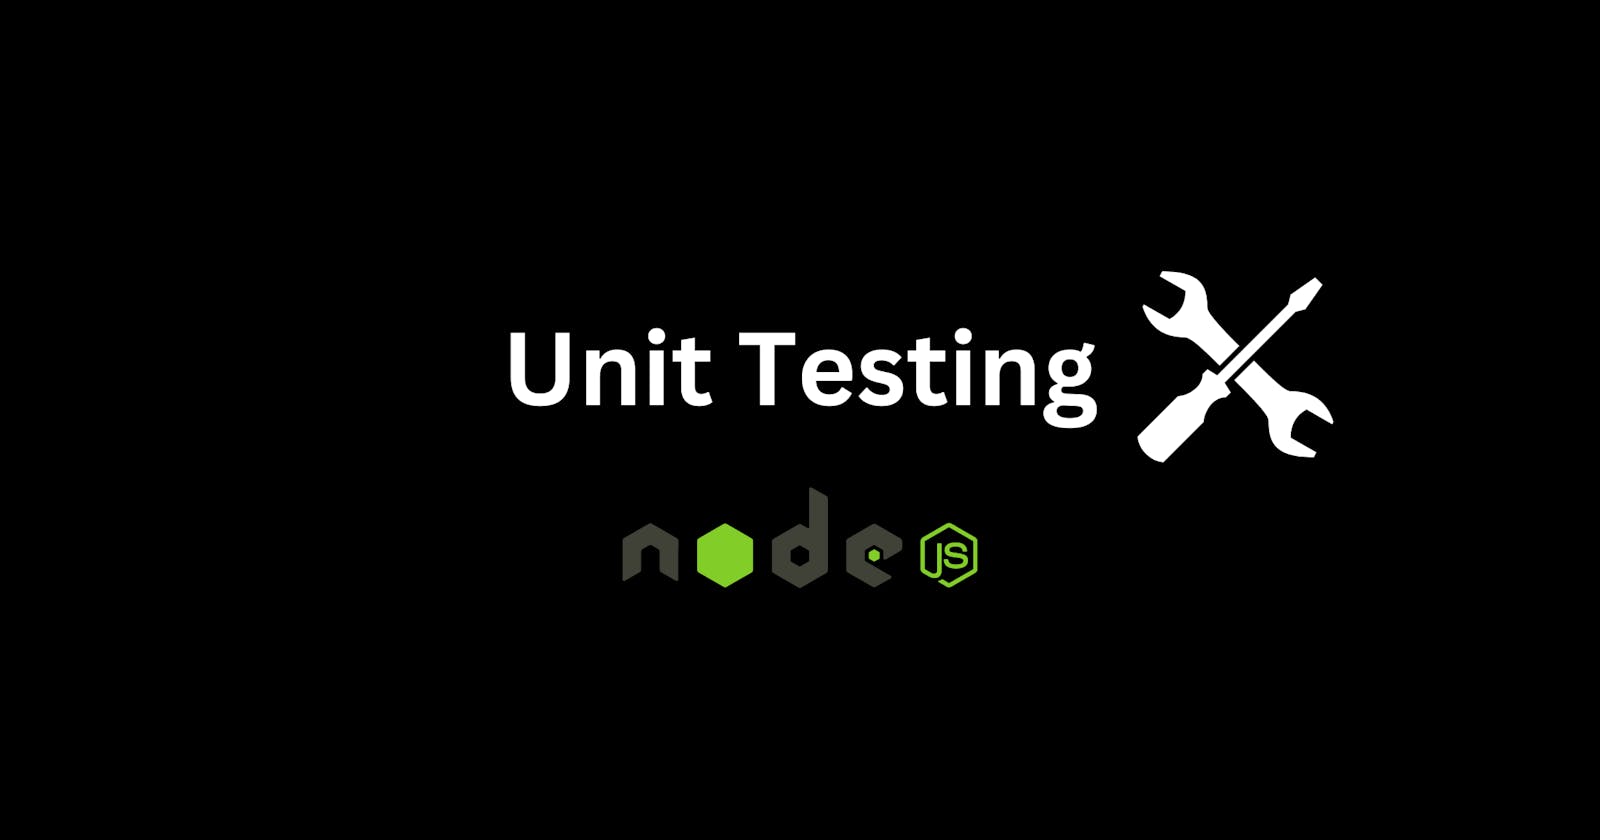 Unit Testing using Mocha, Sinon, and Chai in NodeJS